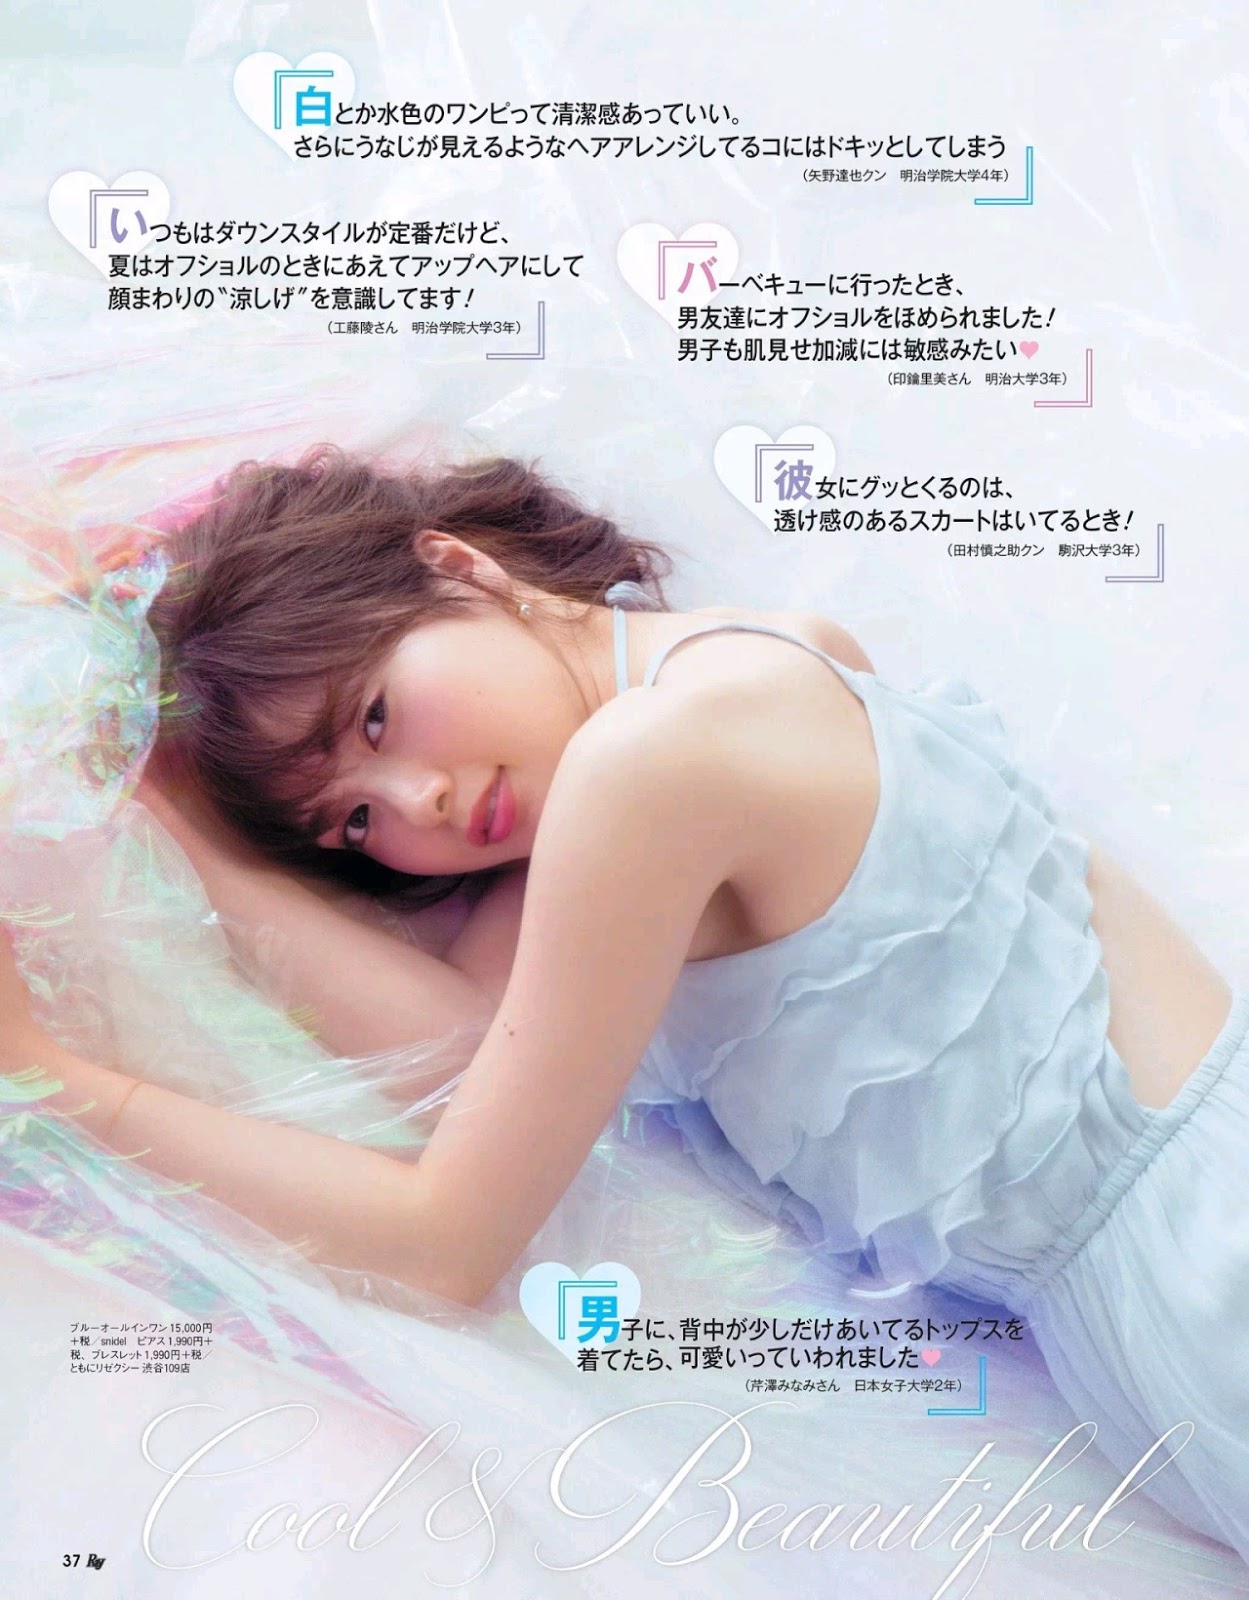 Nao Kanzaki And A Few Friends Nogizaka46 16 Magazine Scans 38